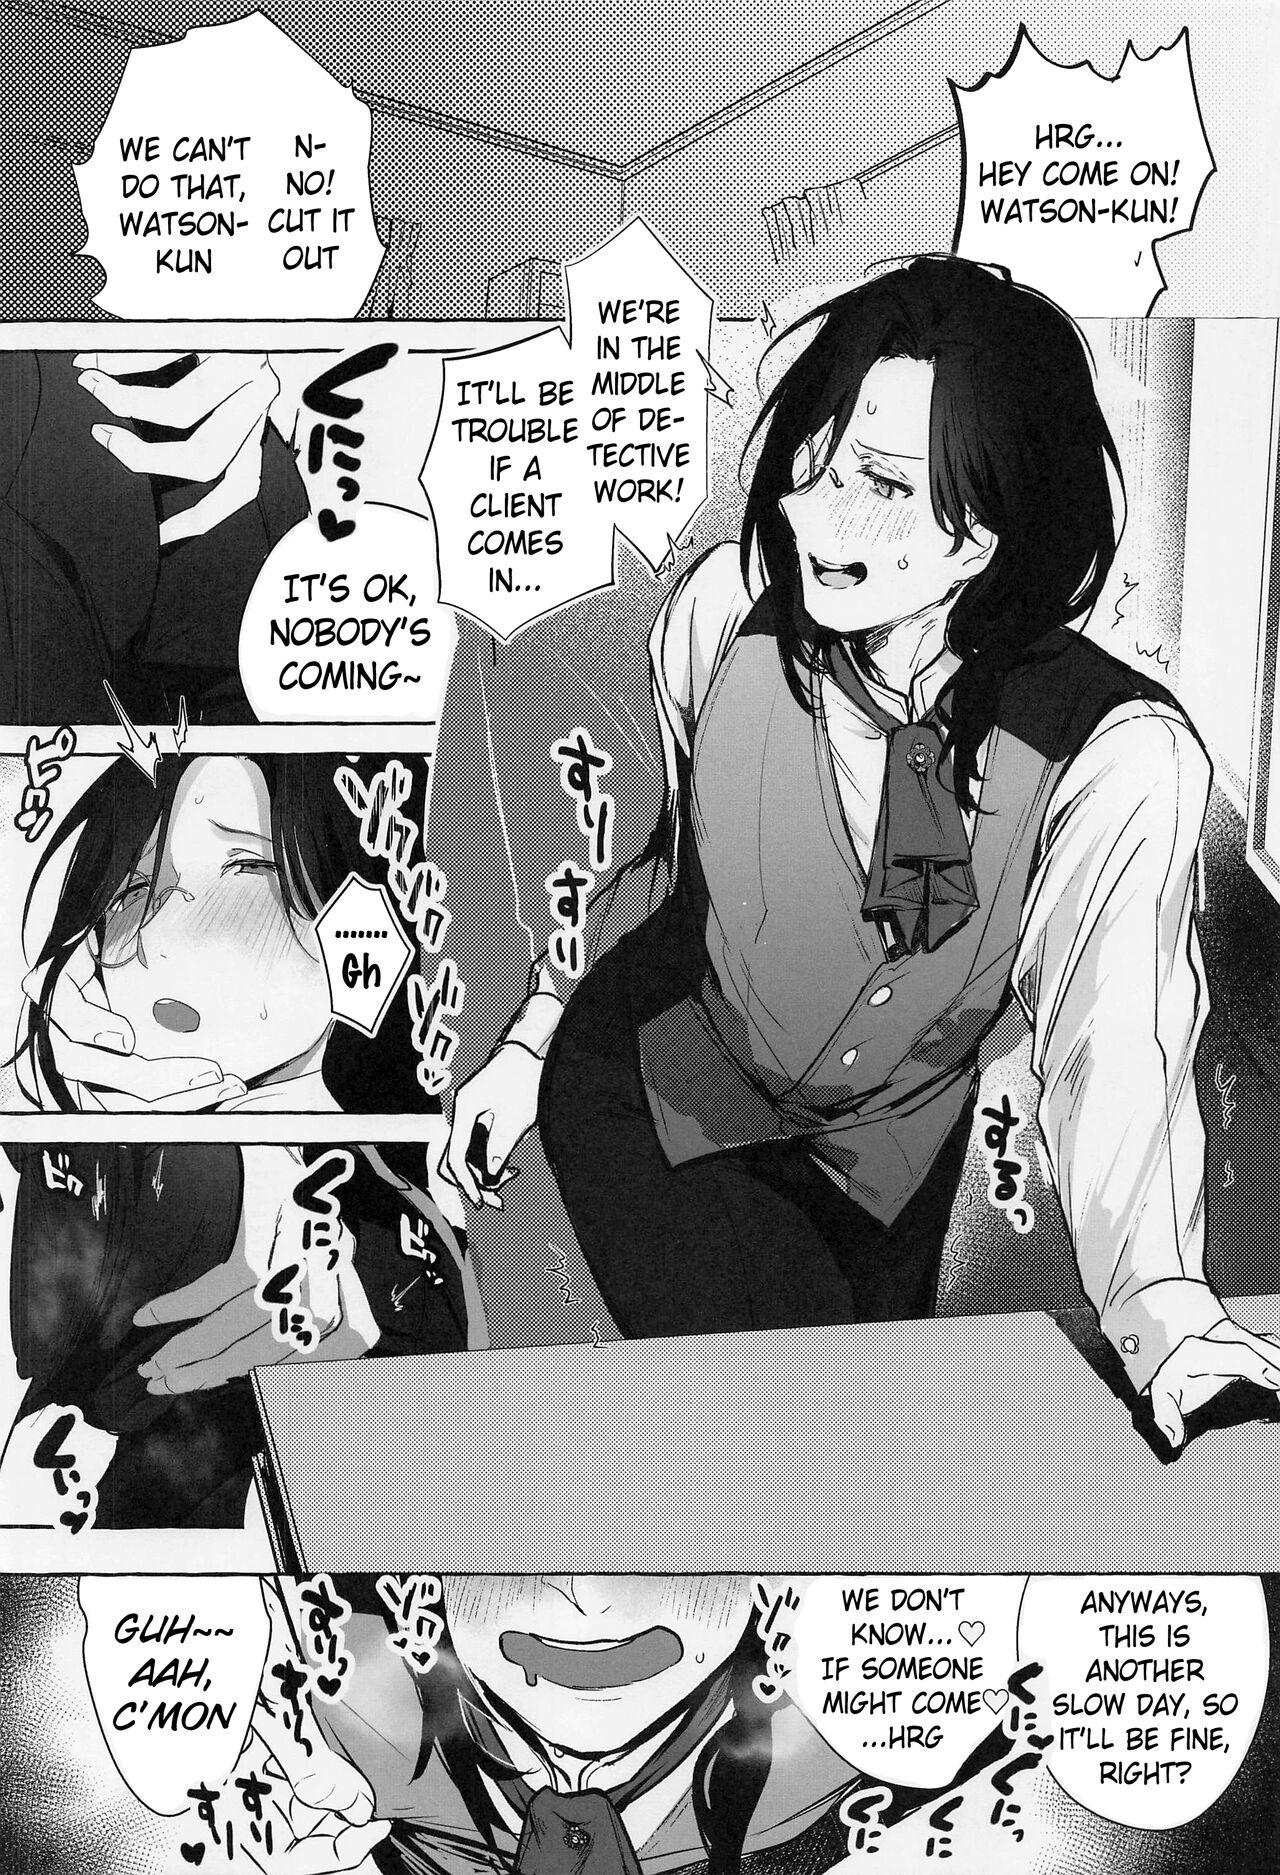 Adorable Meitantei ga Irai wo Kotowaru Hi | The Day the Great Detective Refused a Request - Nijisanji Bukkake Boys - Page 3